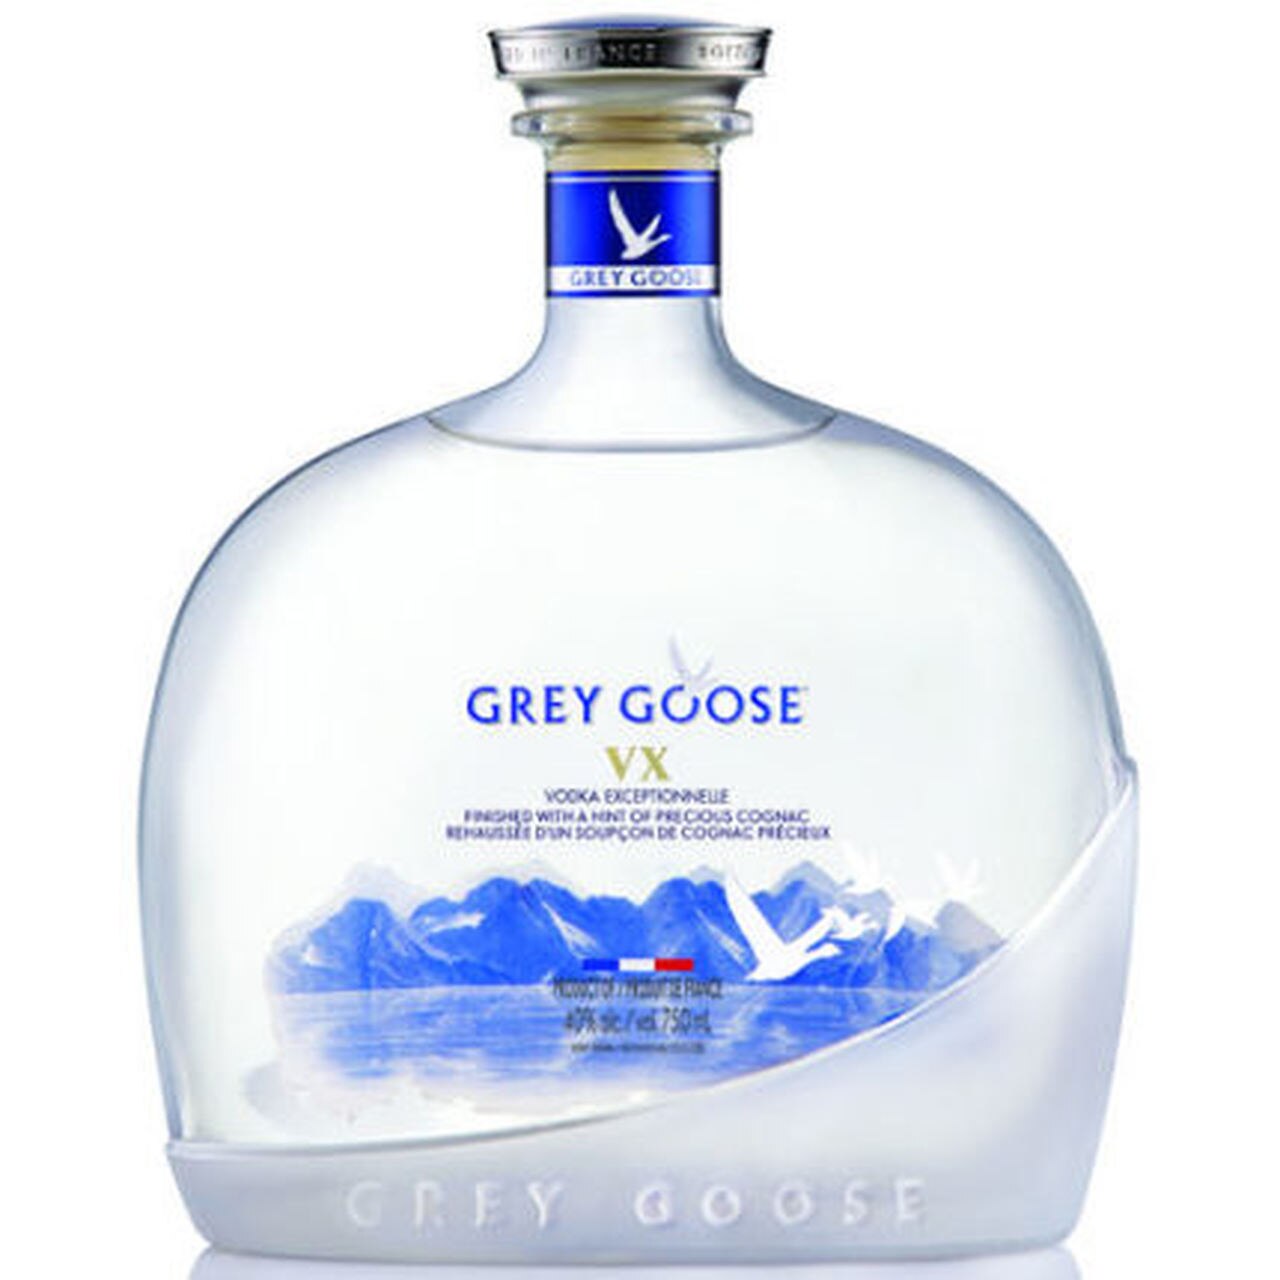 Grey Goose Vodka Malaysia Price : Grey goose vodka l